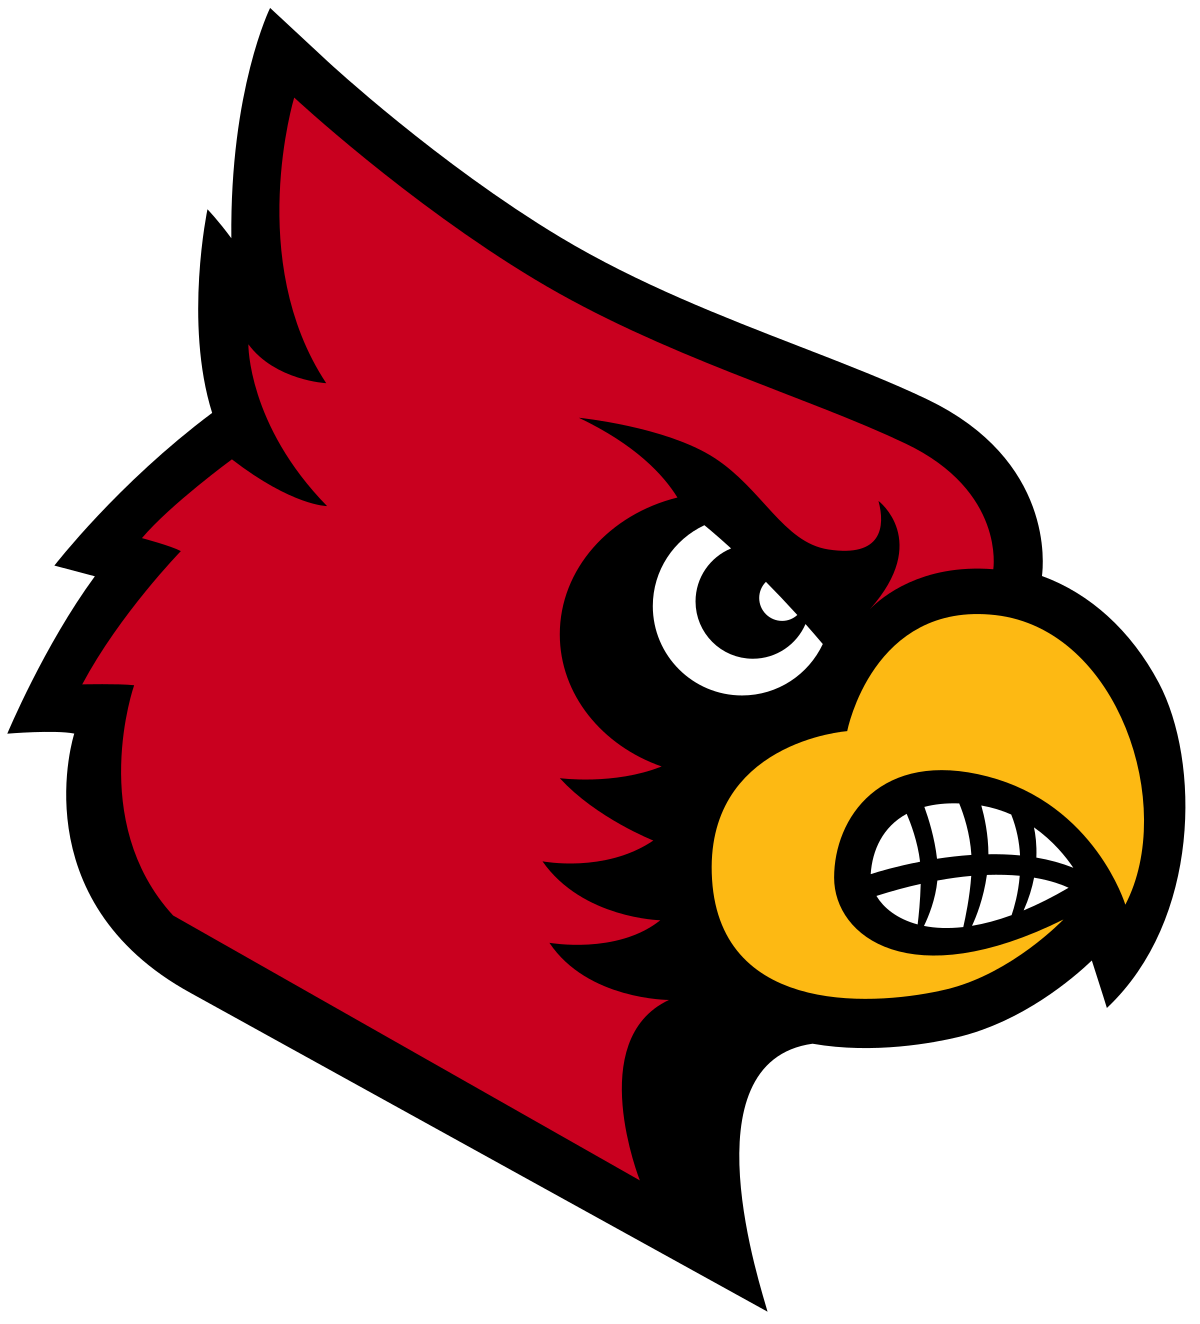 Mad clipart native american. Louisville cardinals wikipedia 